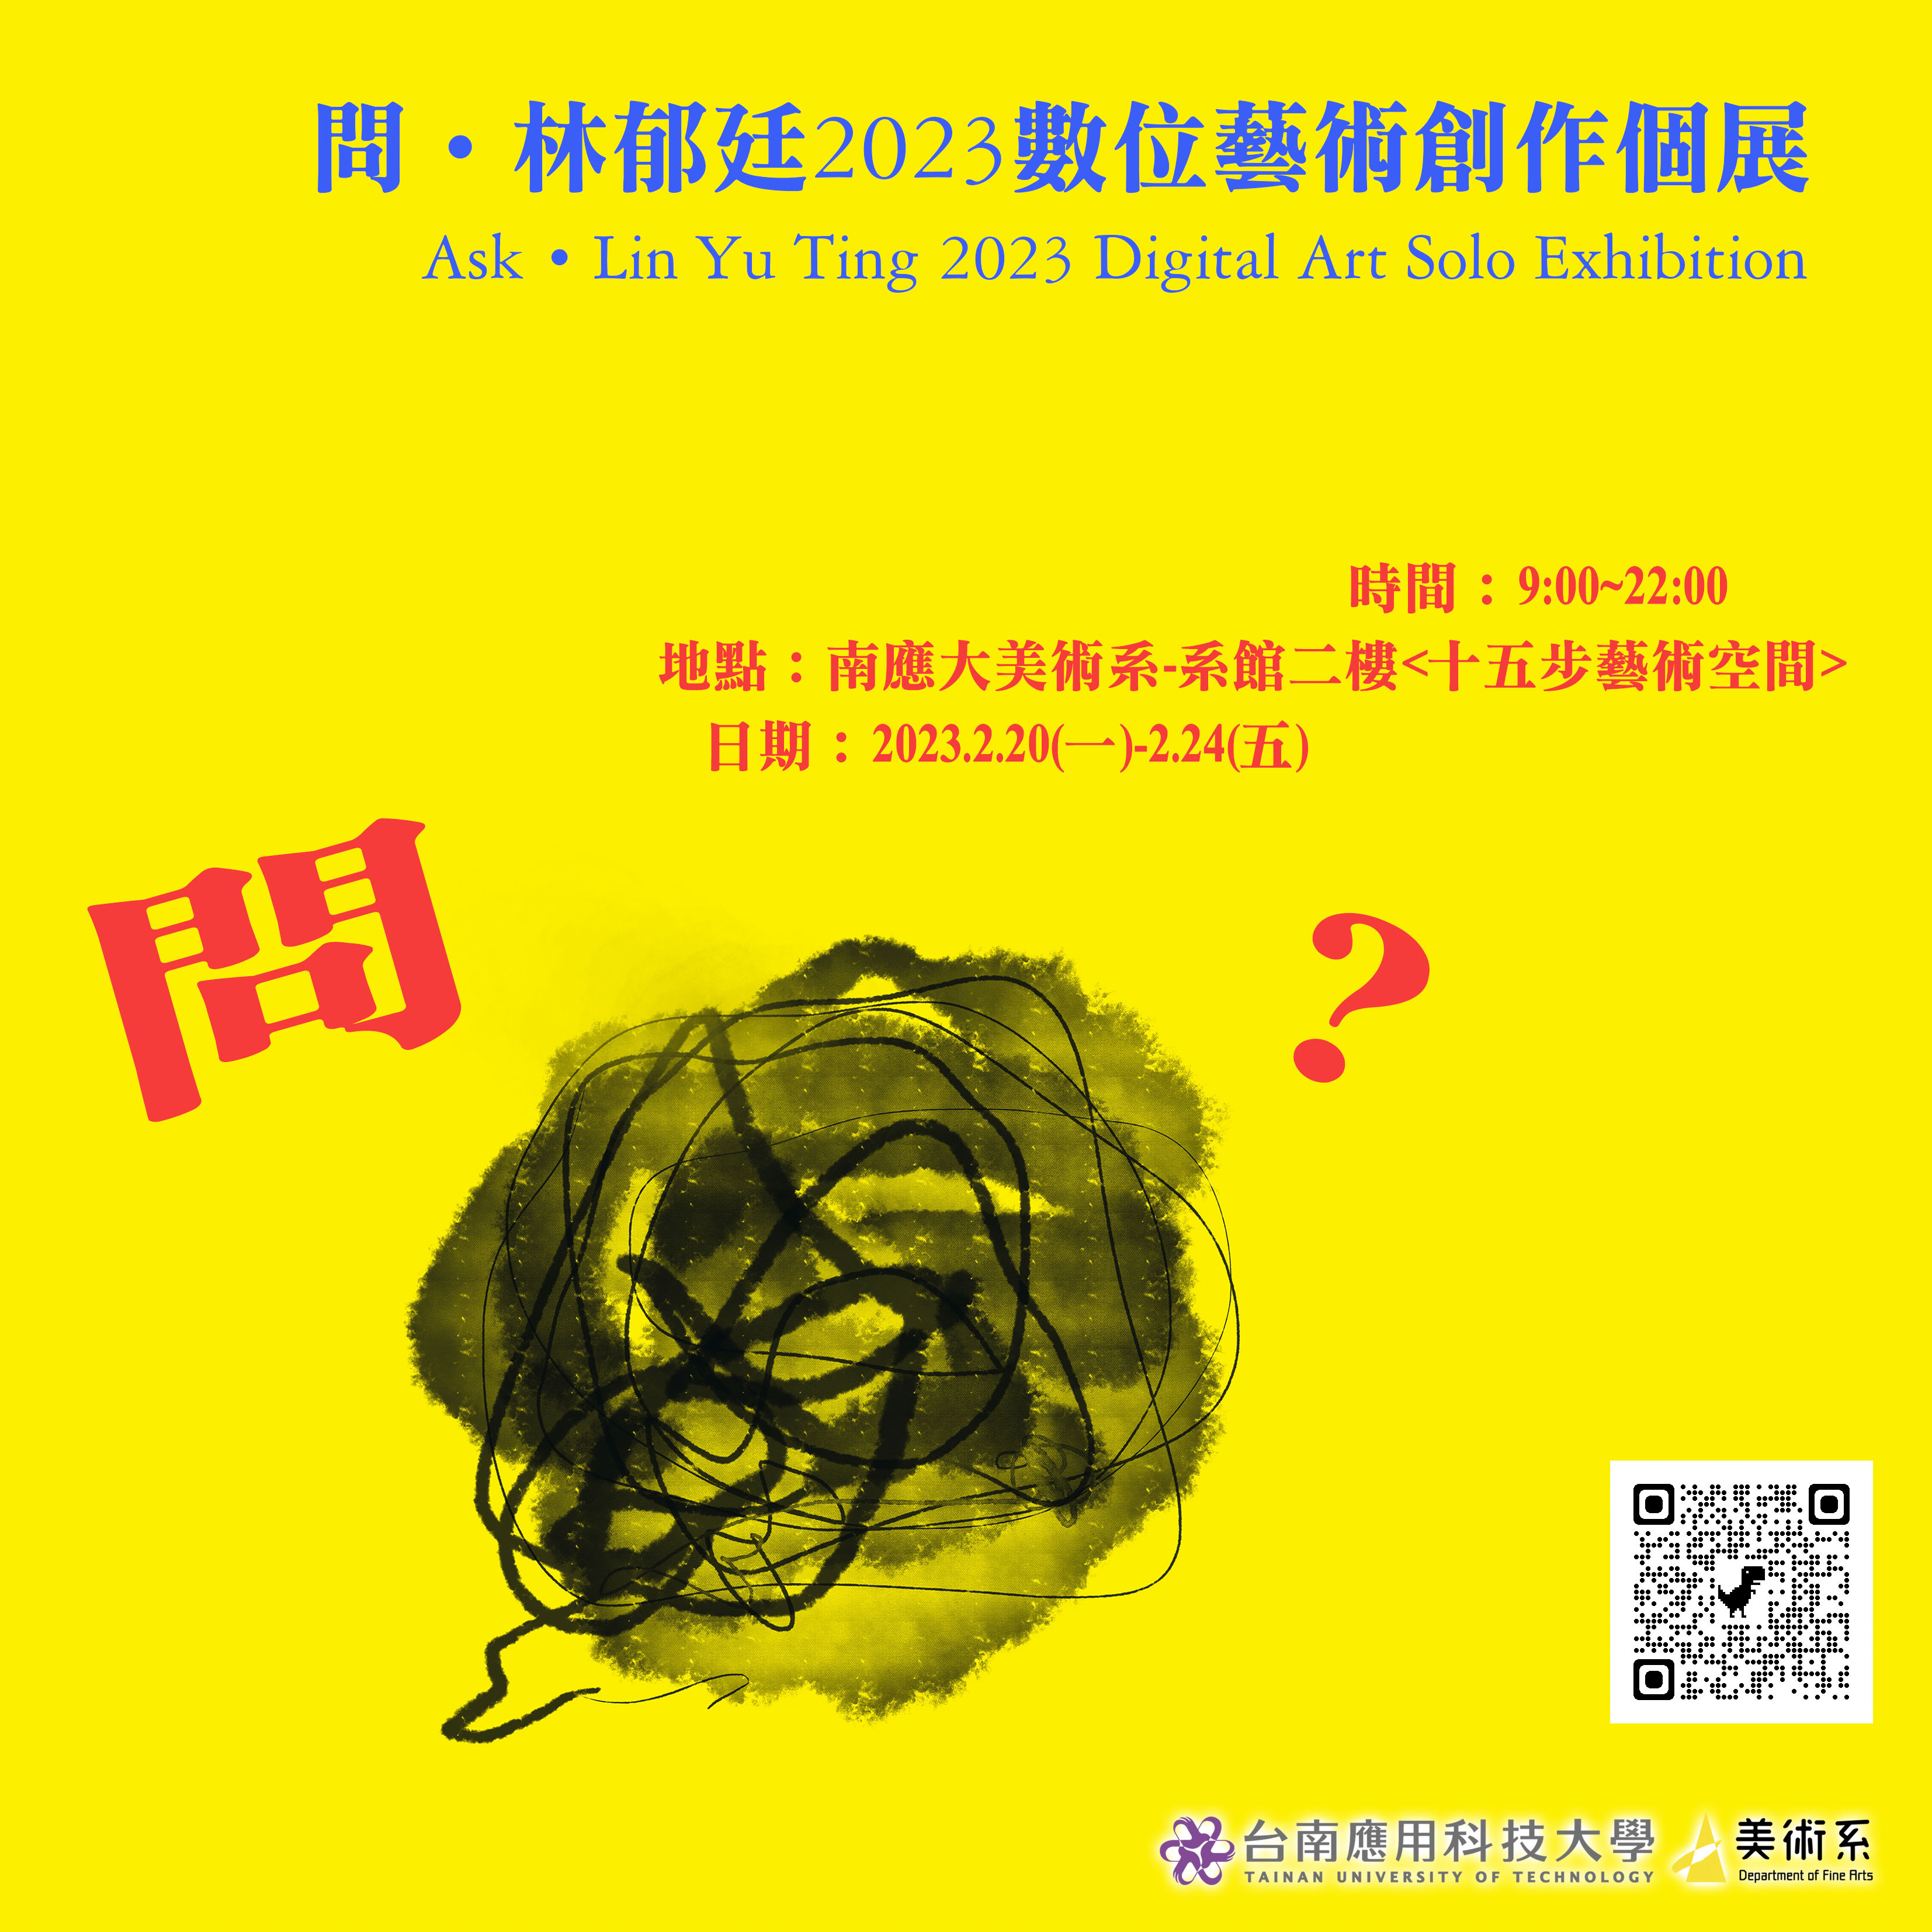 南應大美術系林郁廷老師2023數位藝術創作個展 -問-Ask‧Lin Yu Ting 2023 Digital Art Solo Exhibition